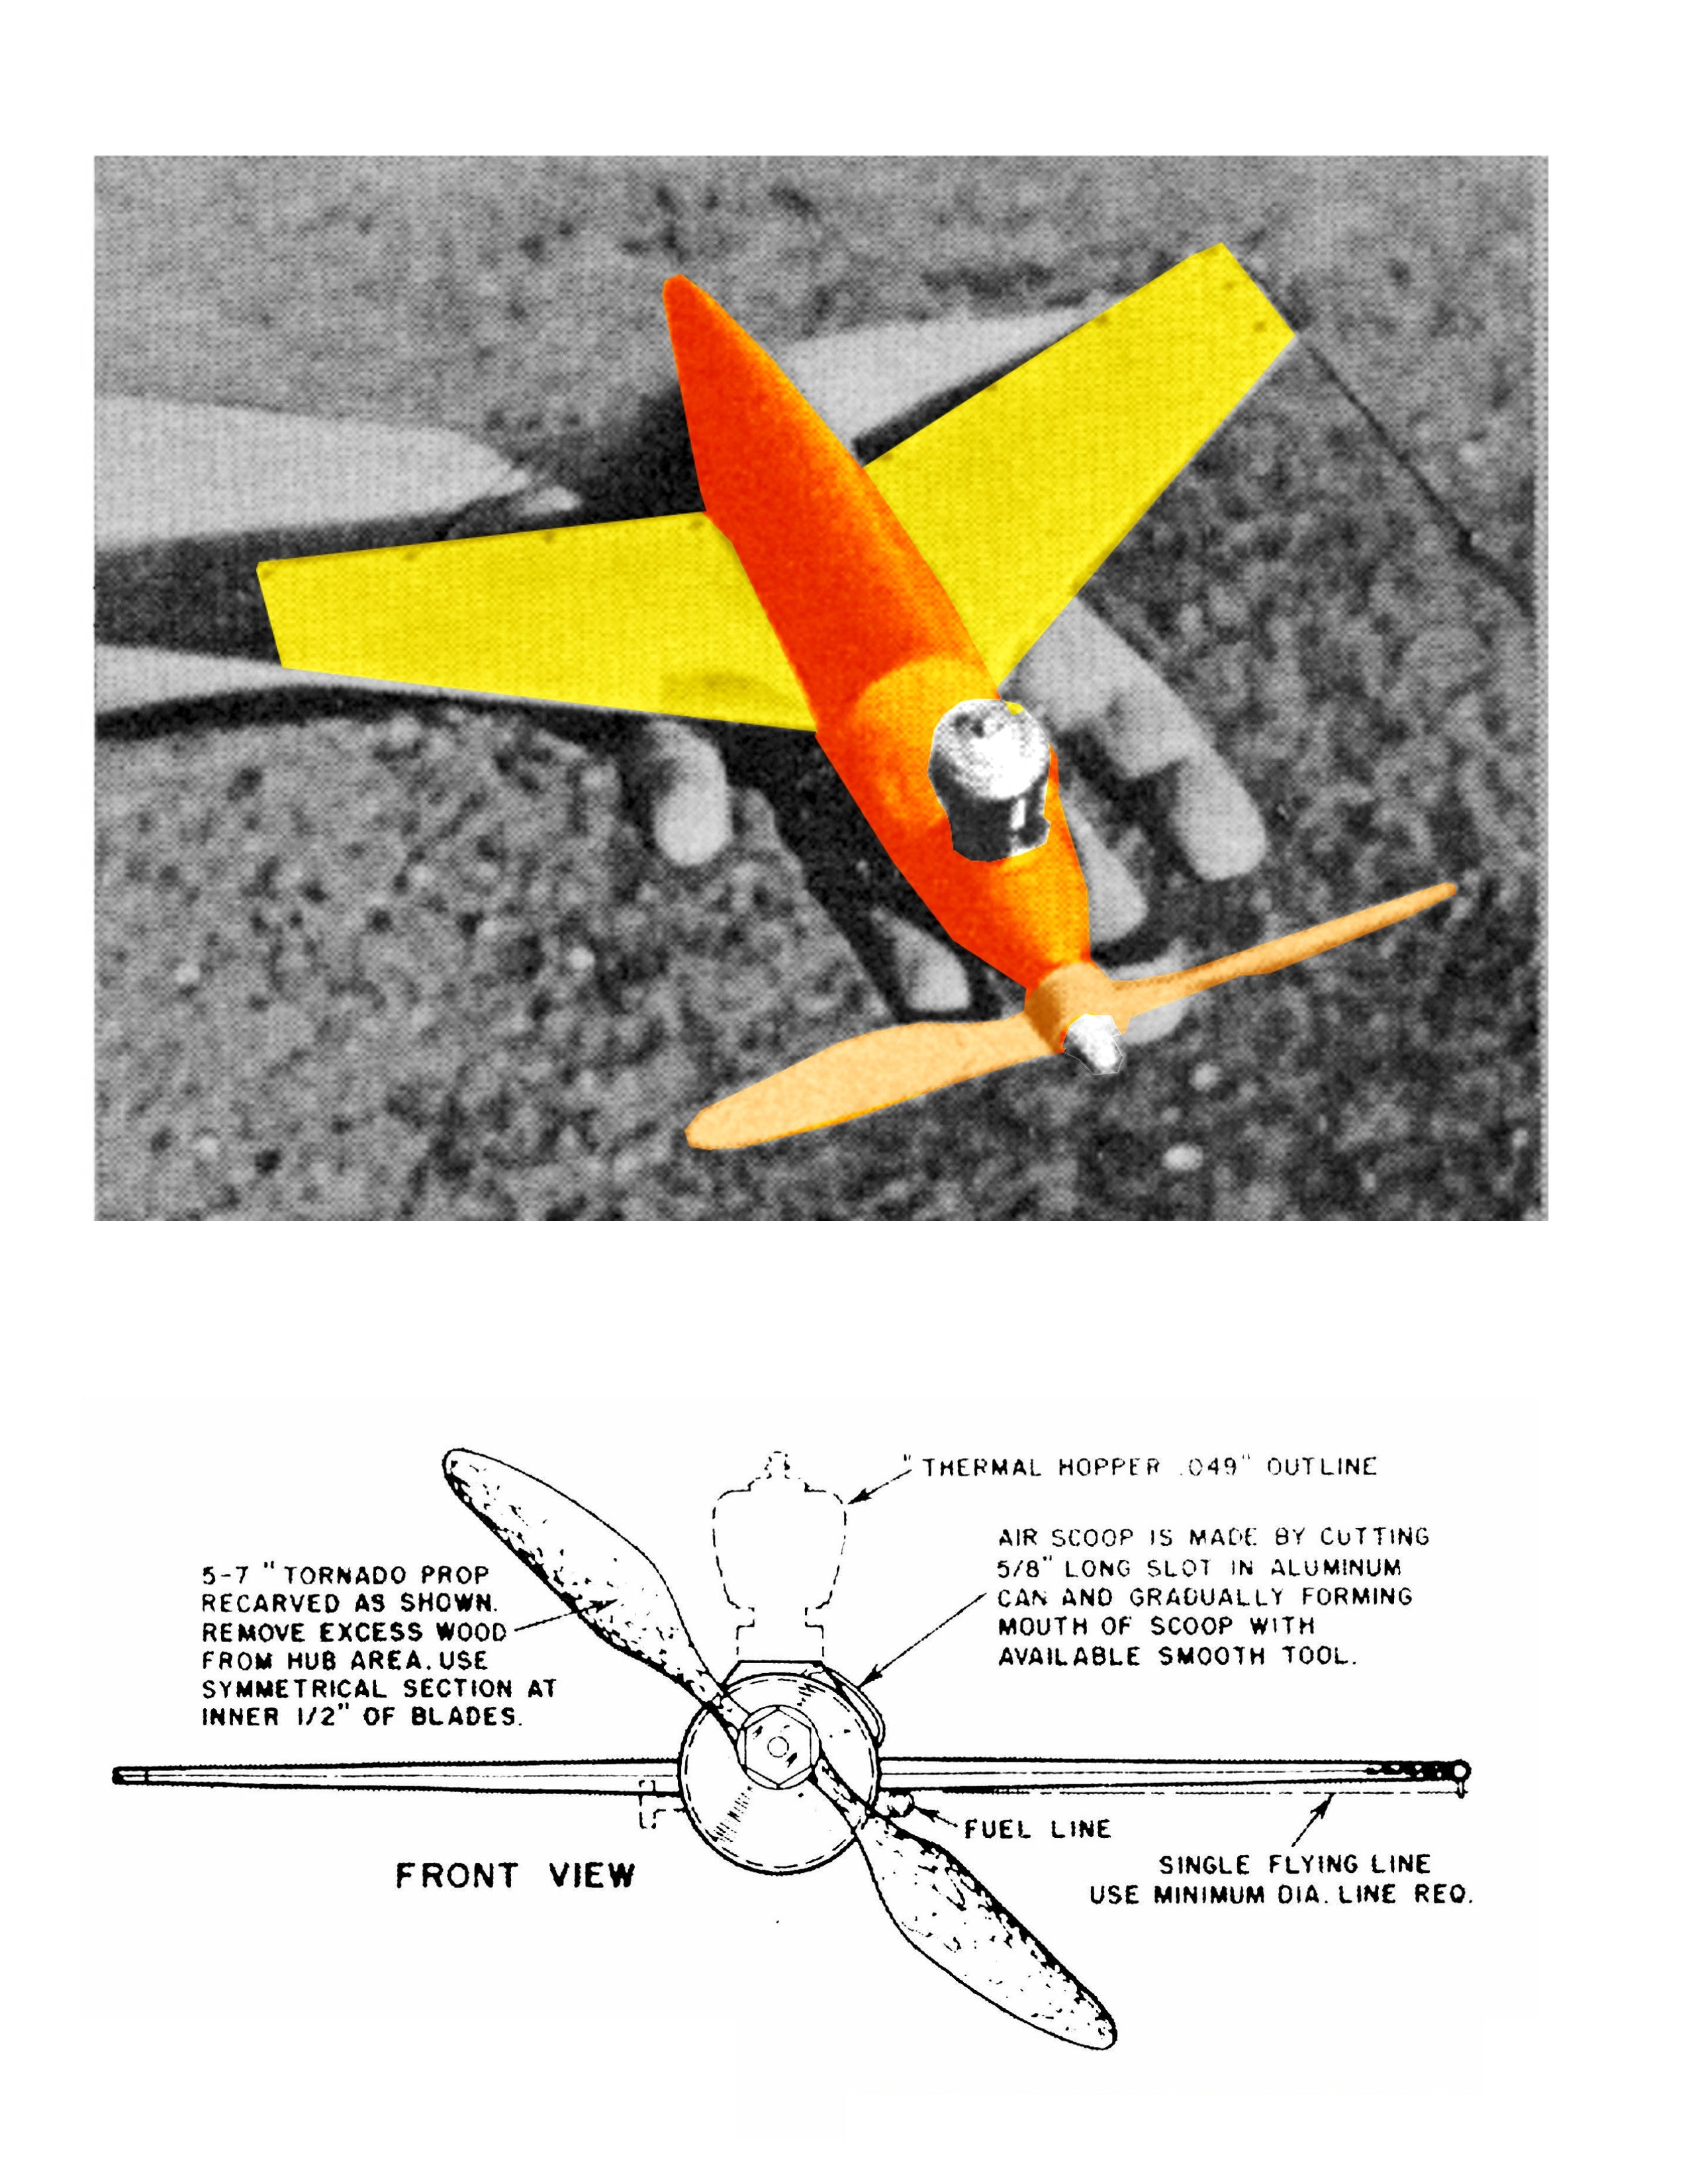 full size printed plan   control line speed  half a "minimum" wingspan 8”  engine .049